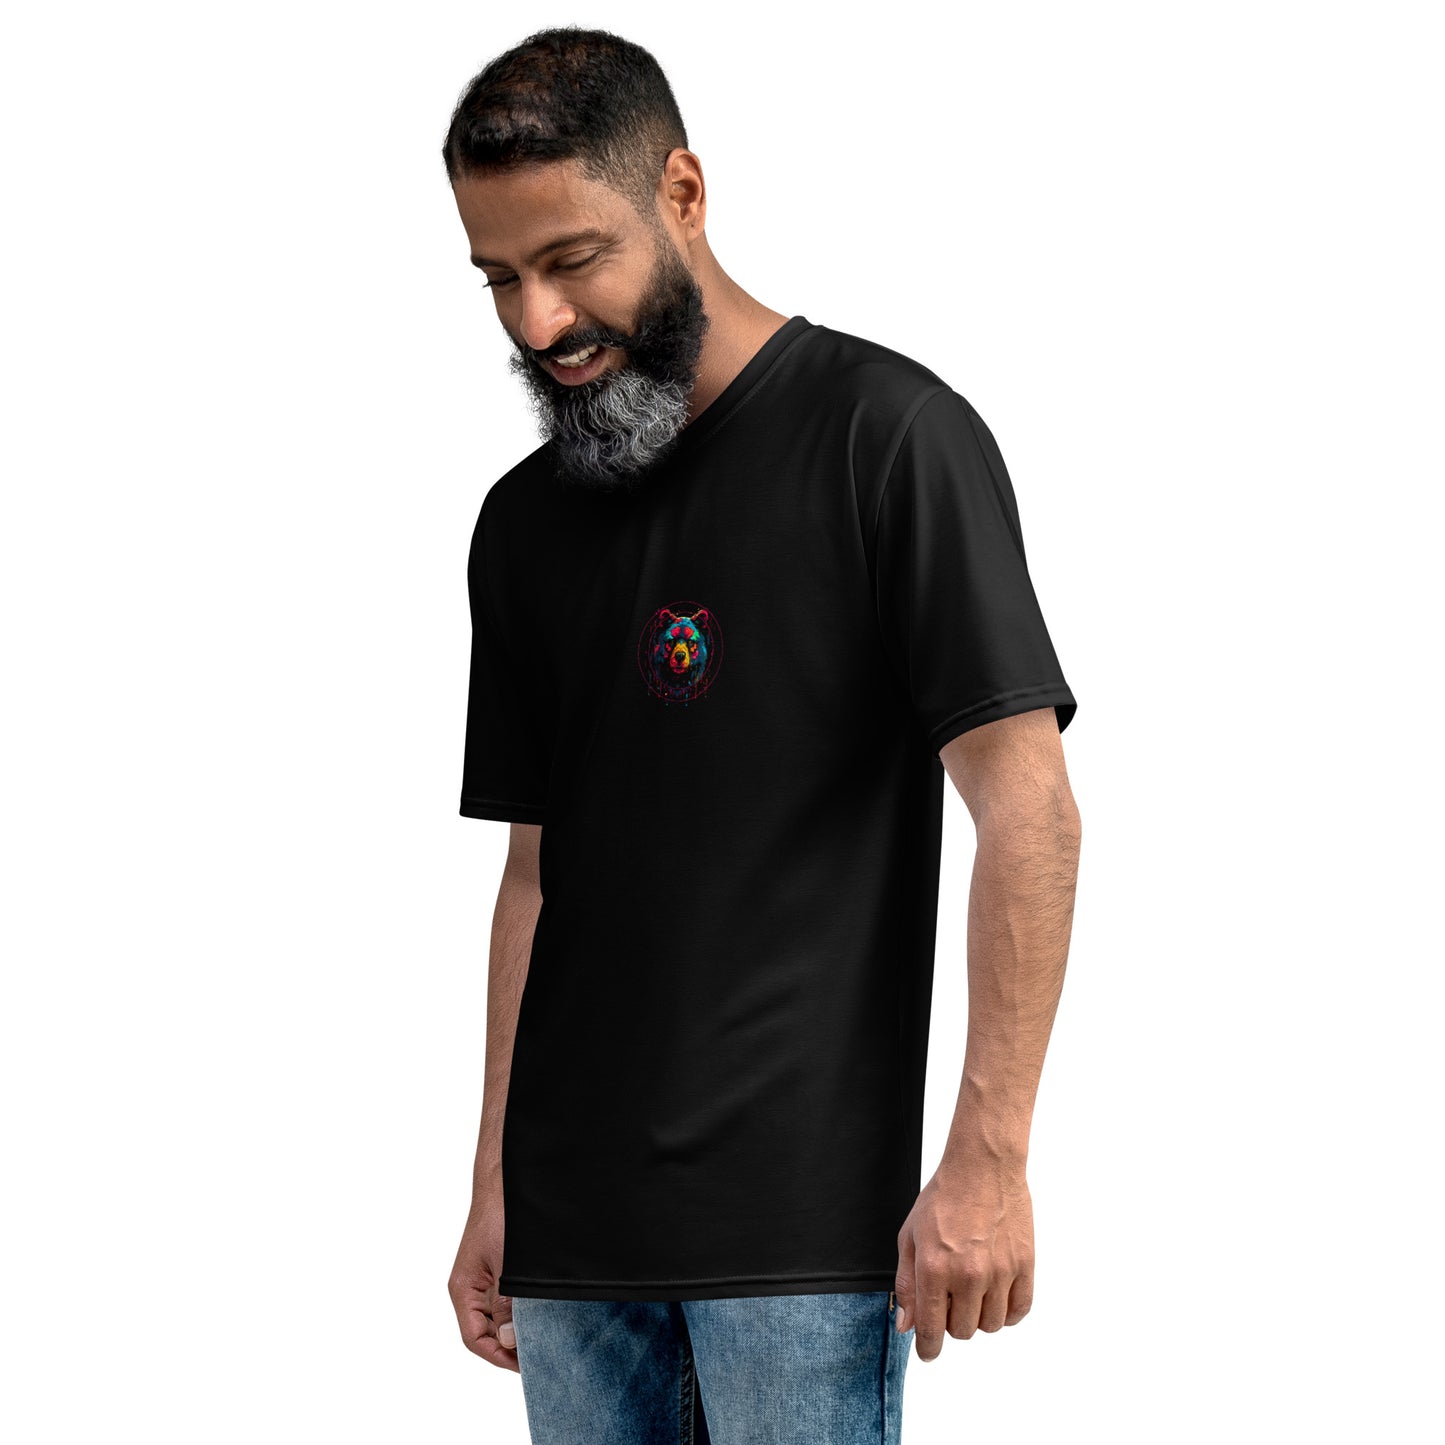 Wearing It Out Bear Logo Pocket Men's t-shirt